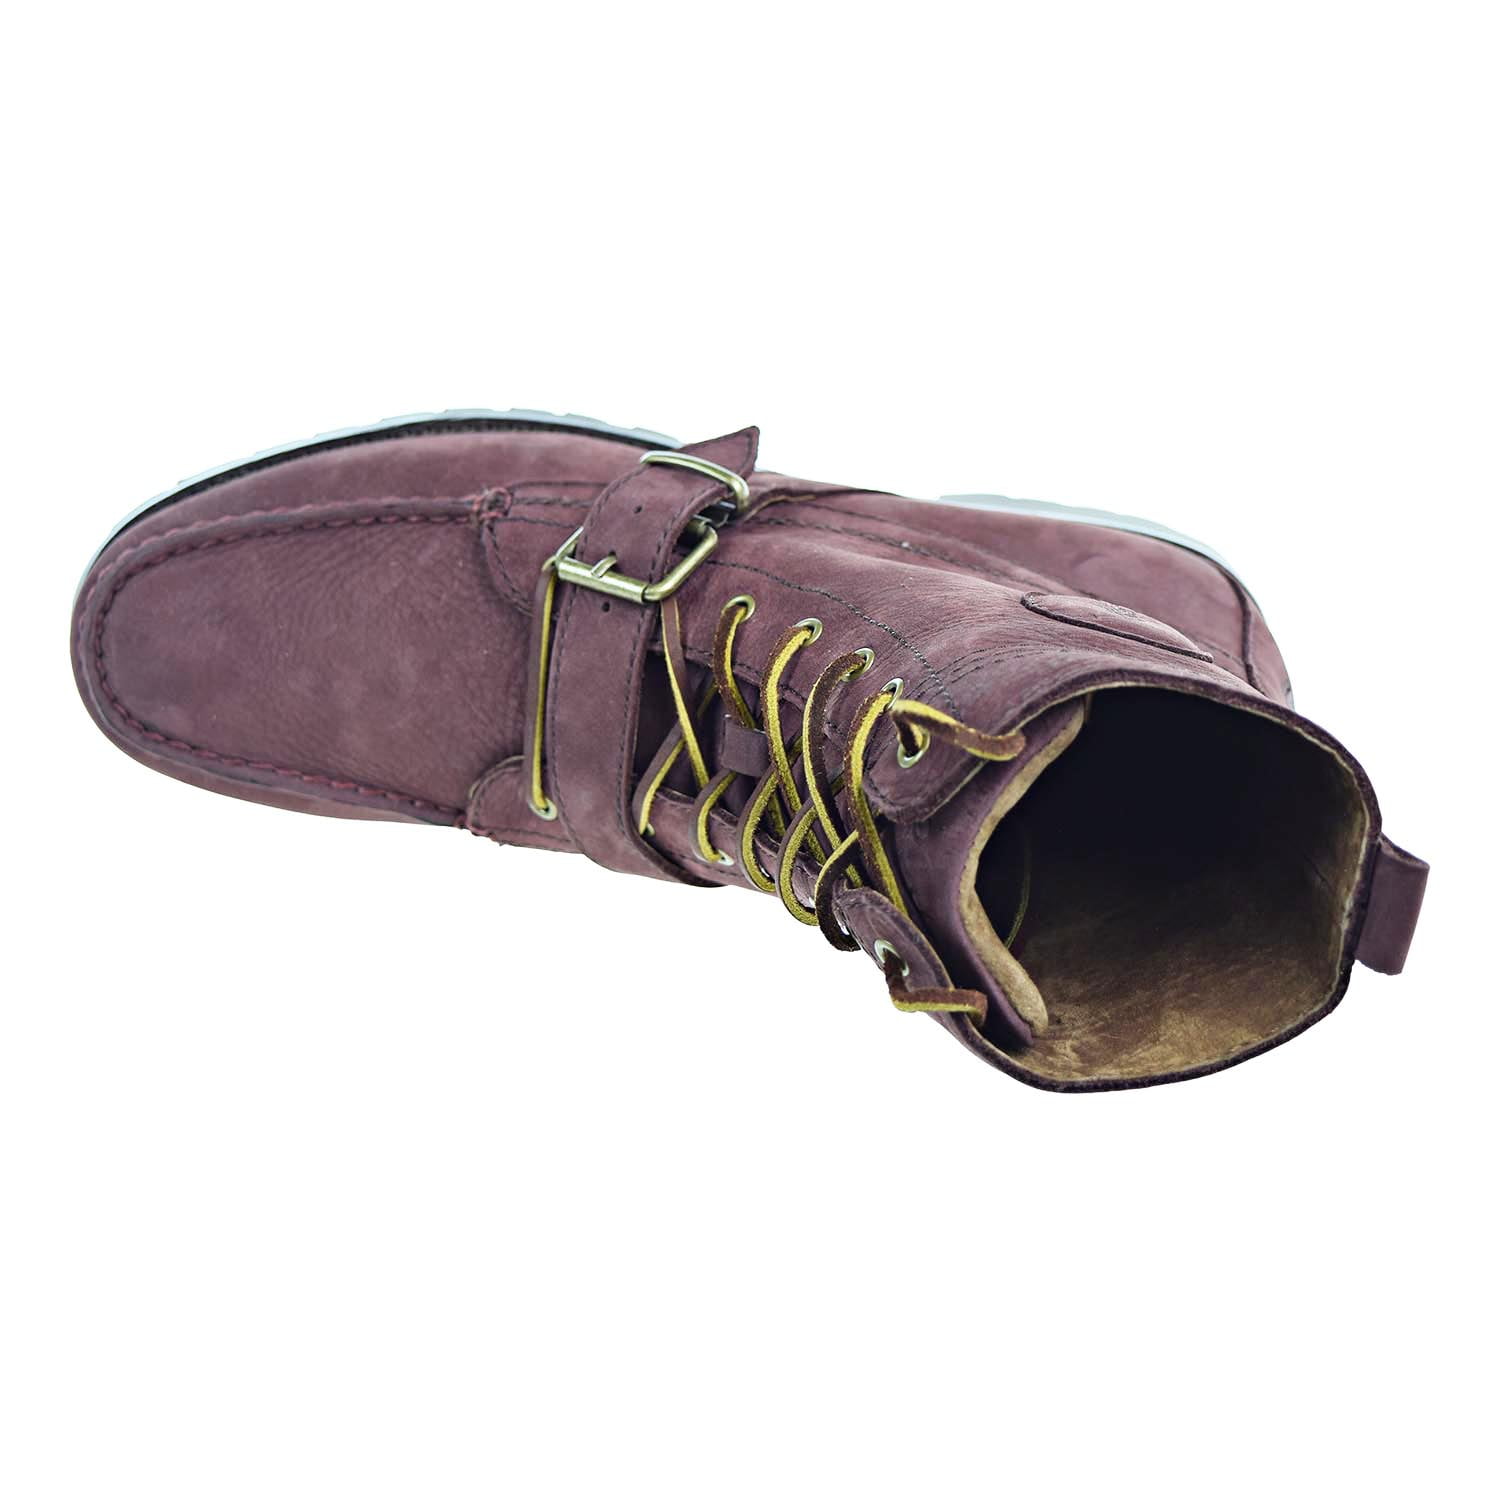 Polo Ralph Lauren Men's Ranger Boots Port Nubuck 812570443-001 